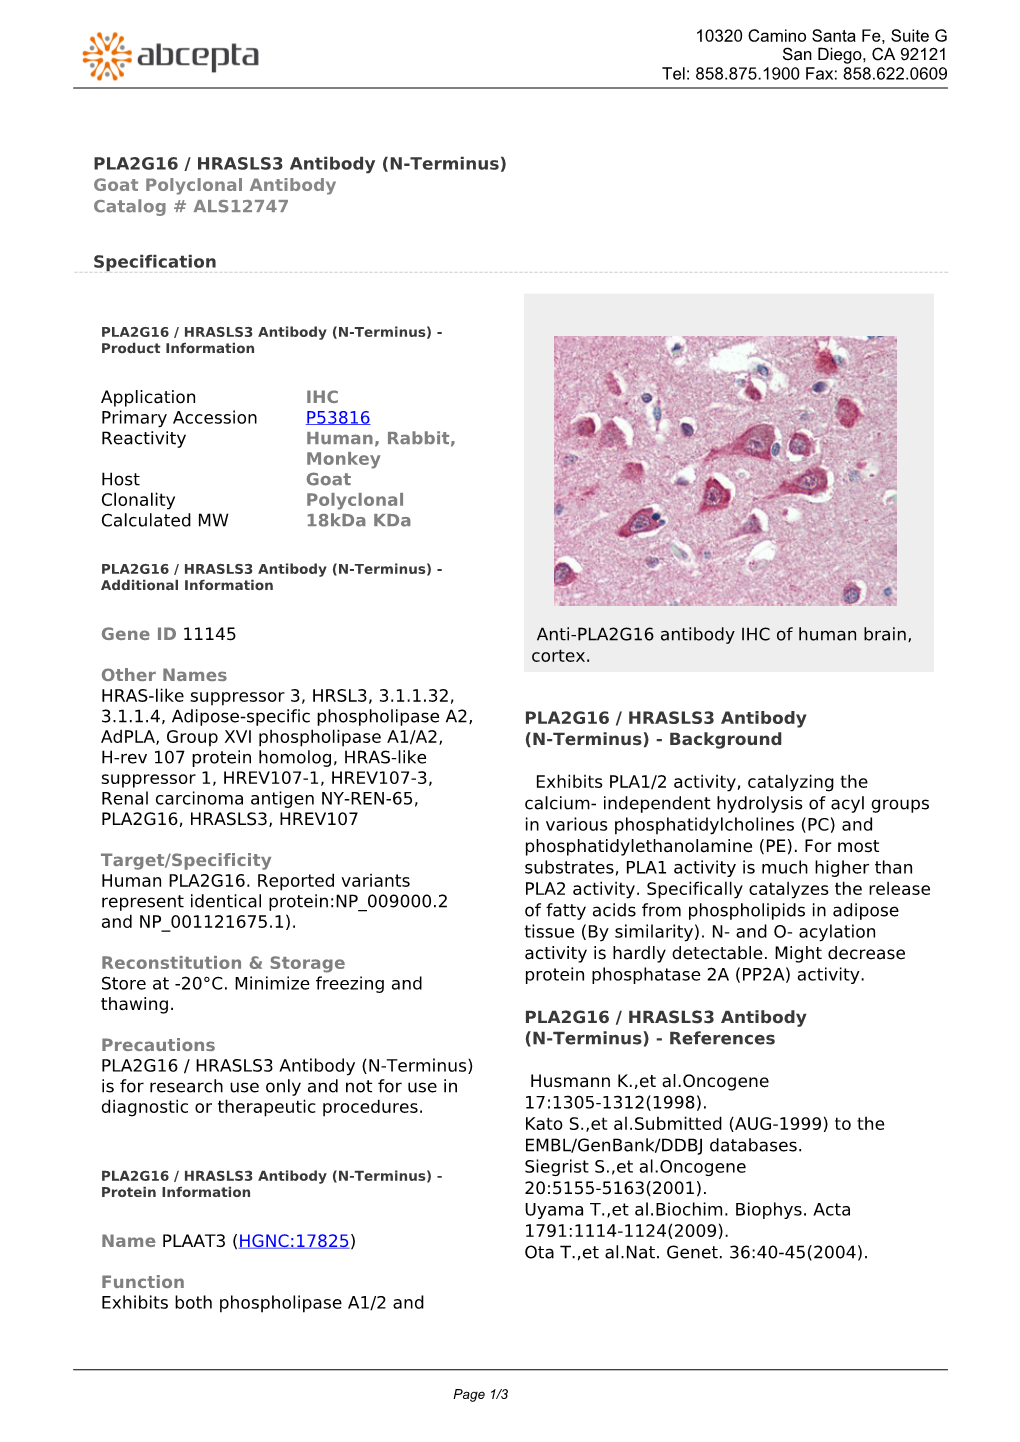 PLA2G16 / HRASLS3 Antibody (N-Terminus) Goat Polyclonal Antibody Catalog # ALS12747